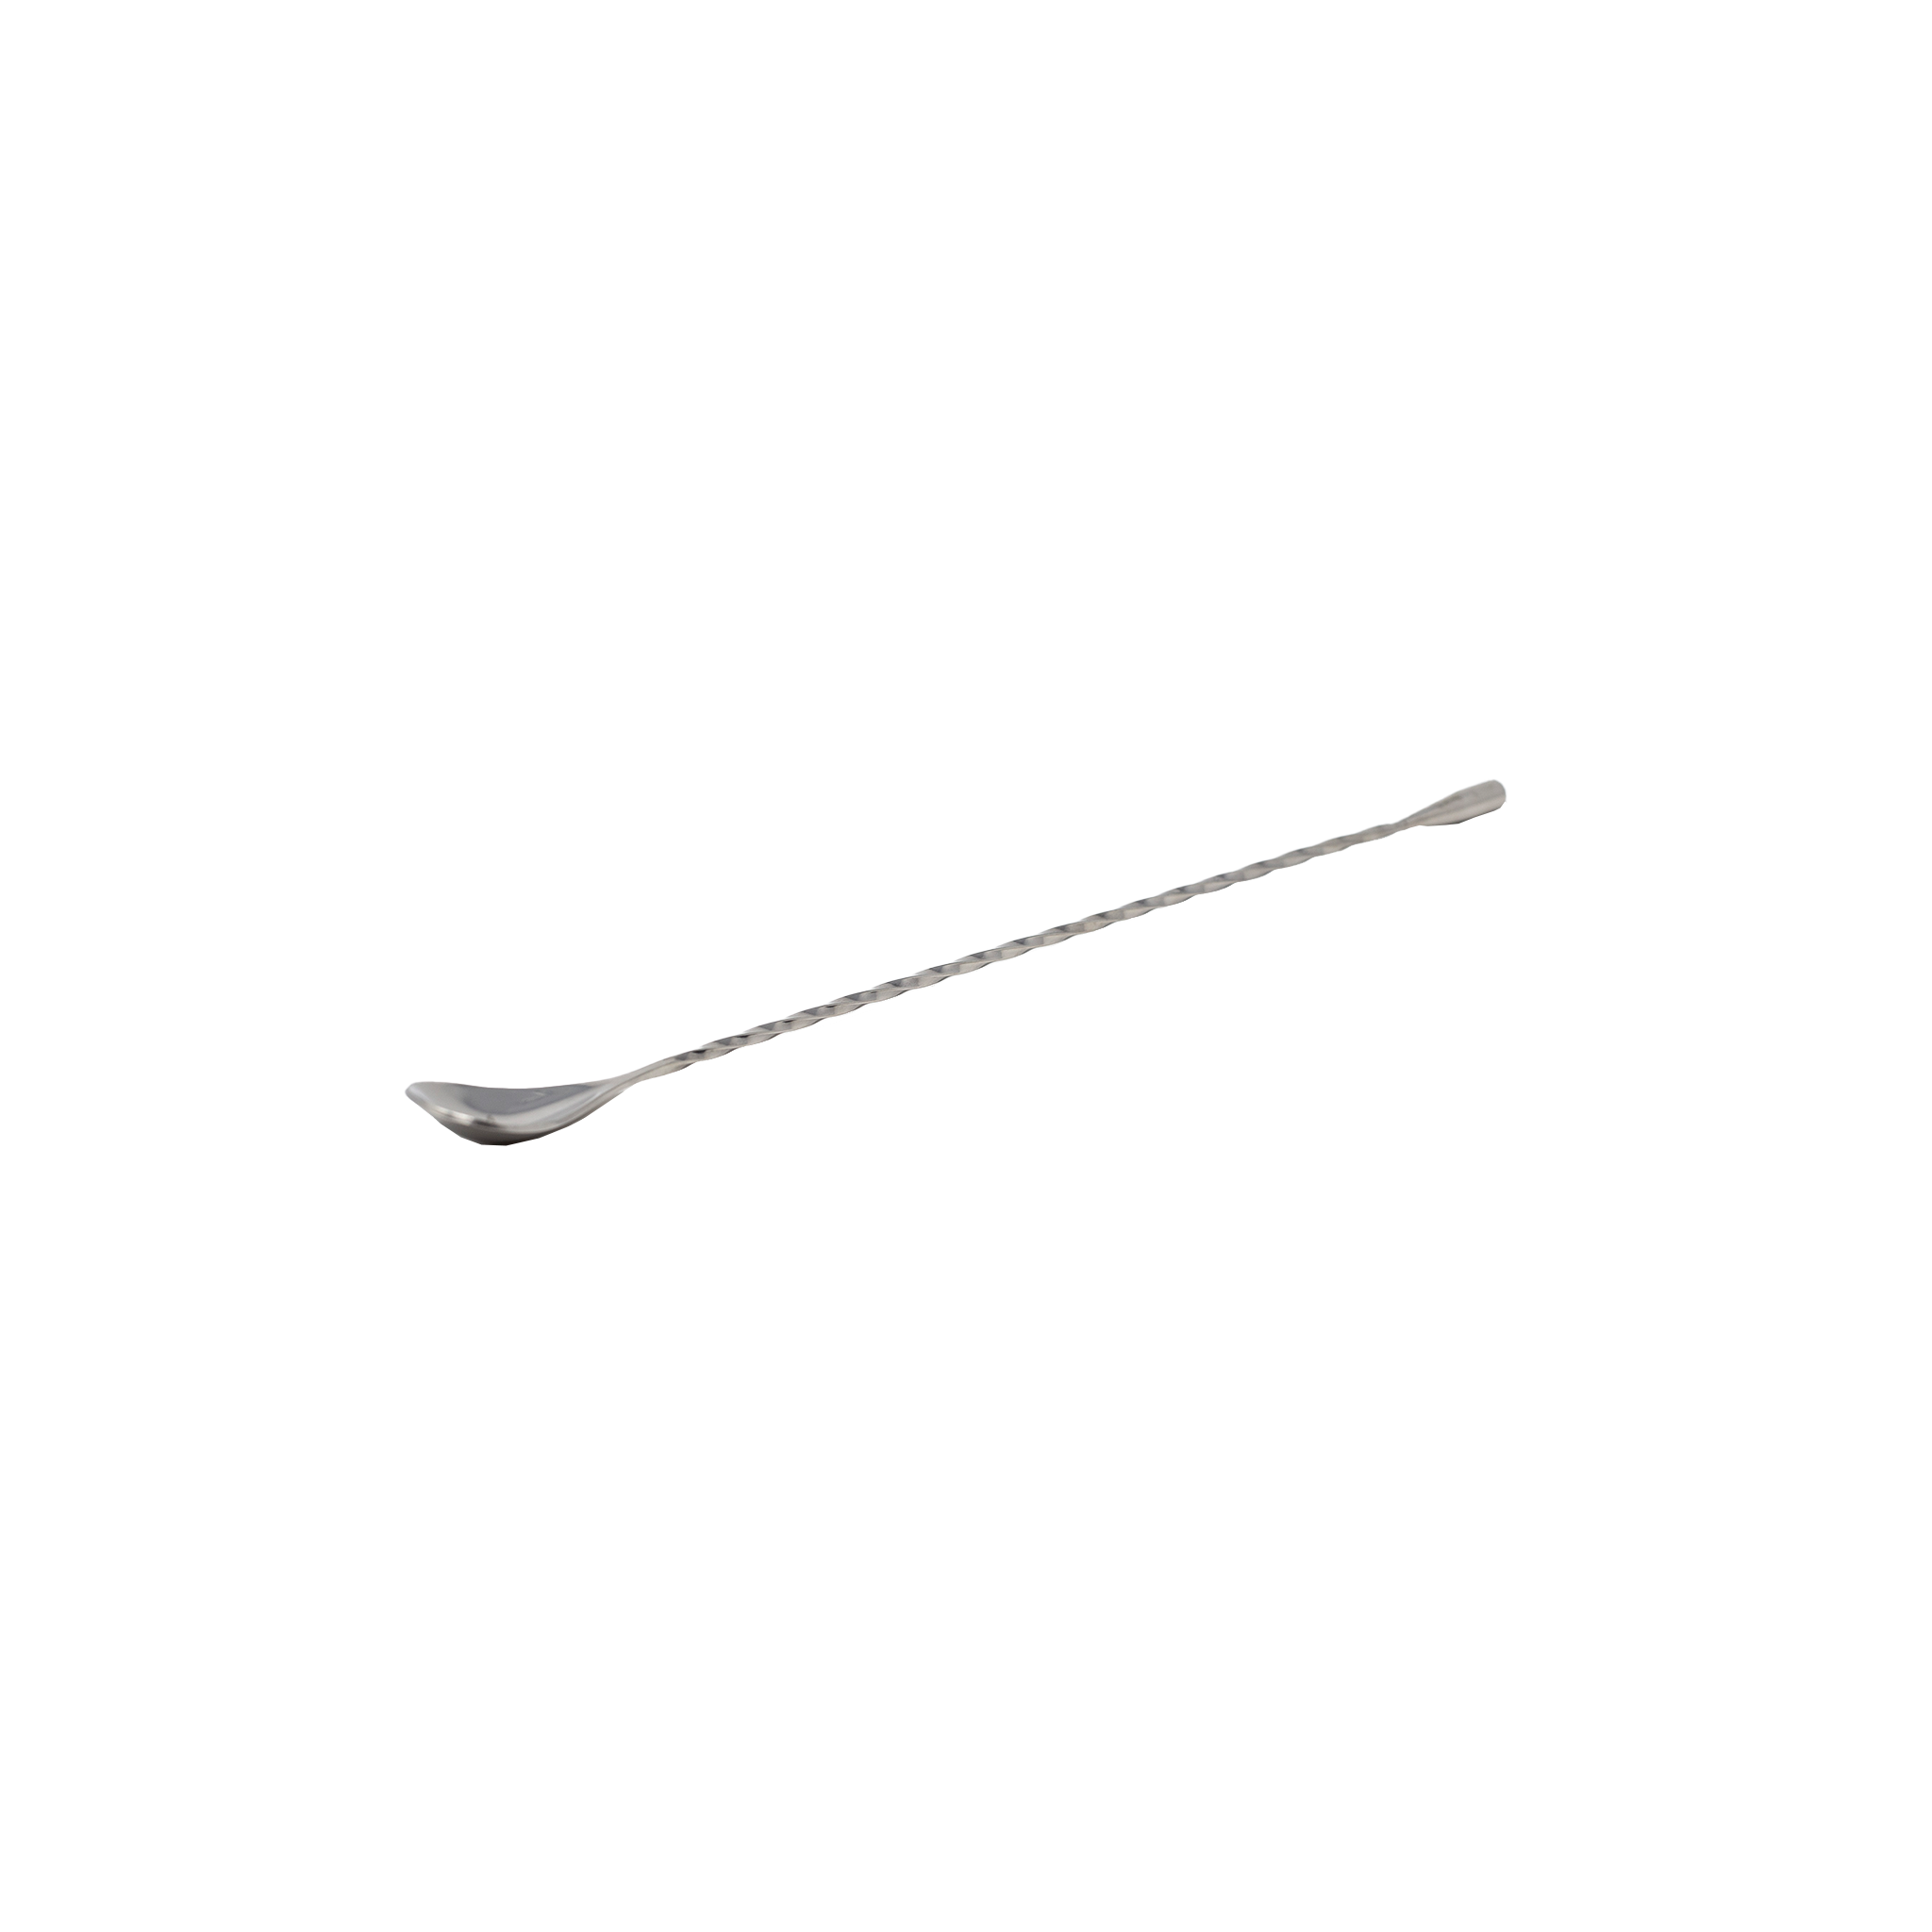 Stainless Steel Long Stemmed Bar Spoon, 5 ml Spoon Measurement